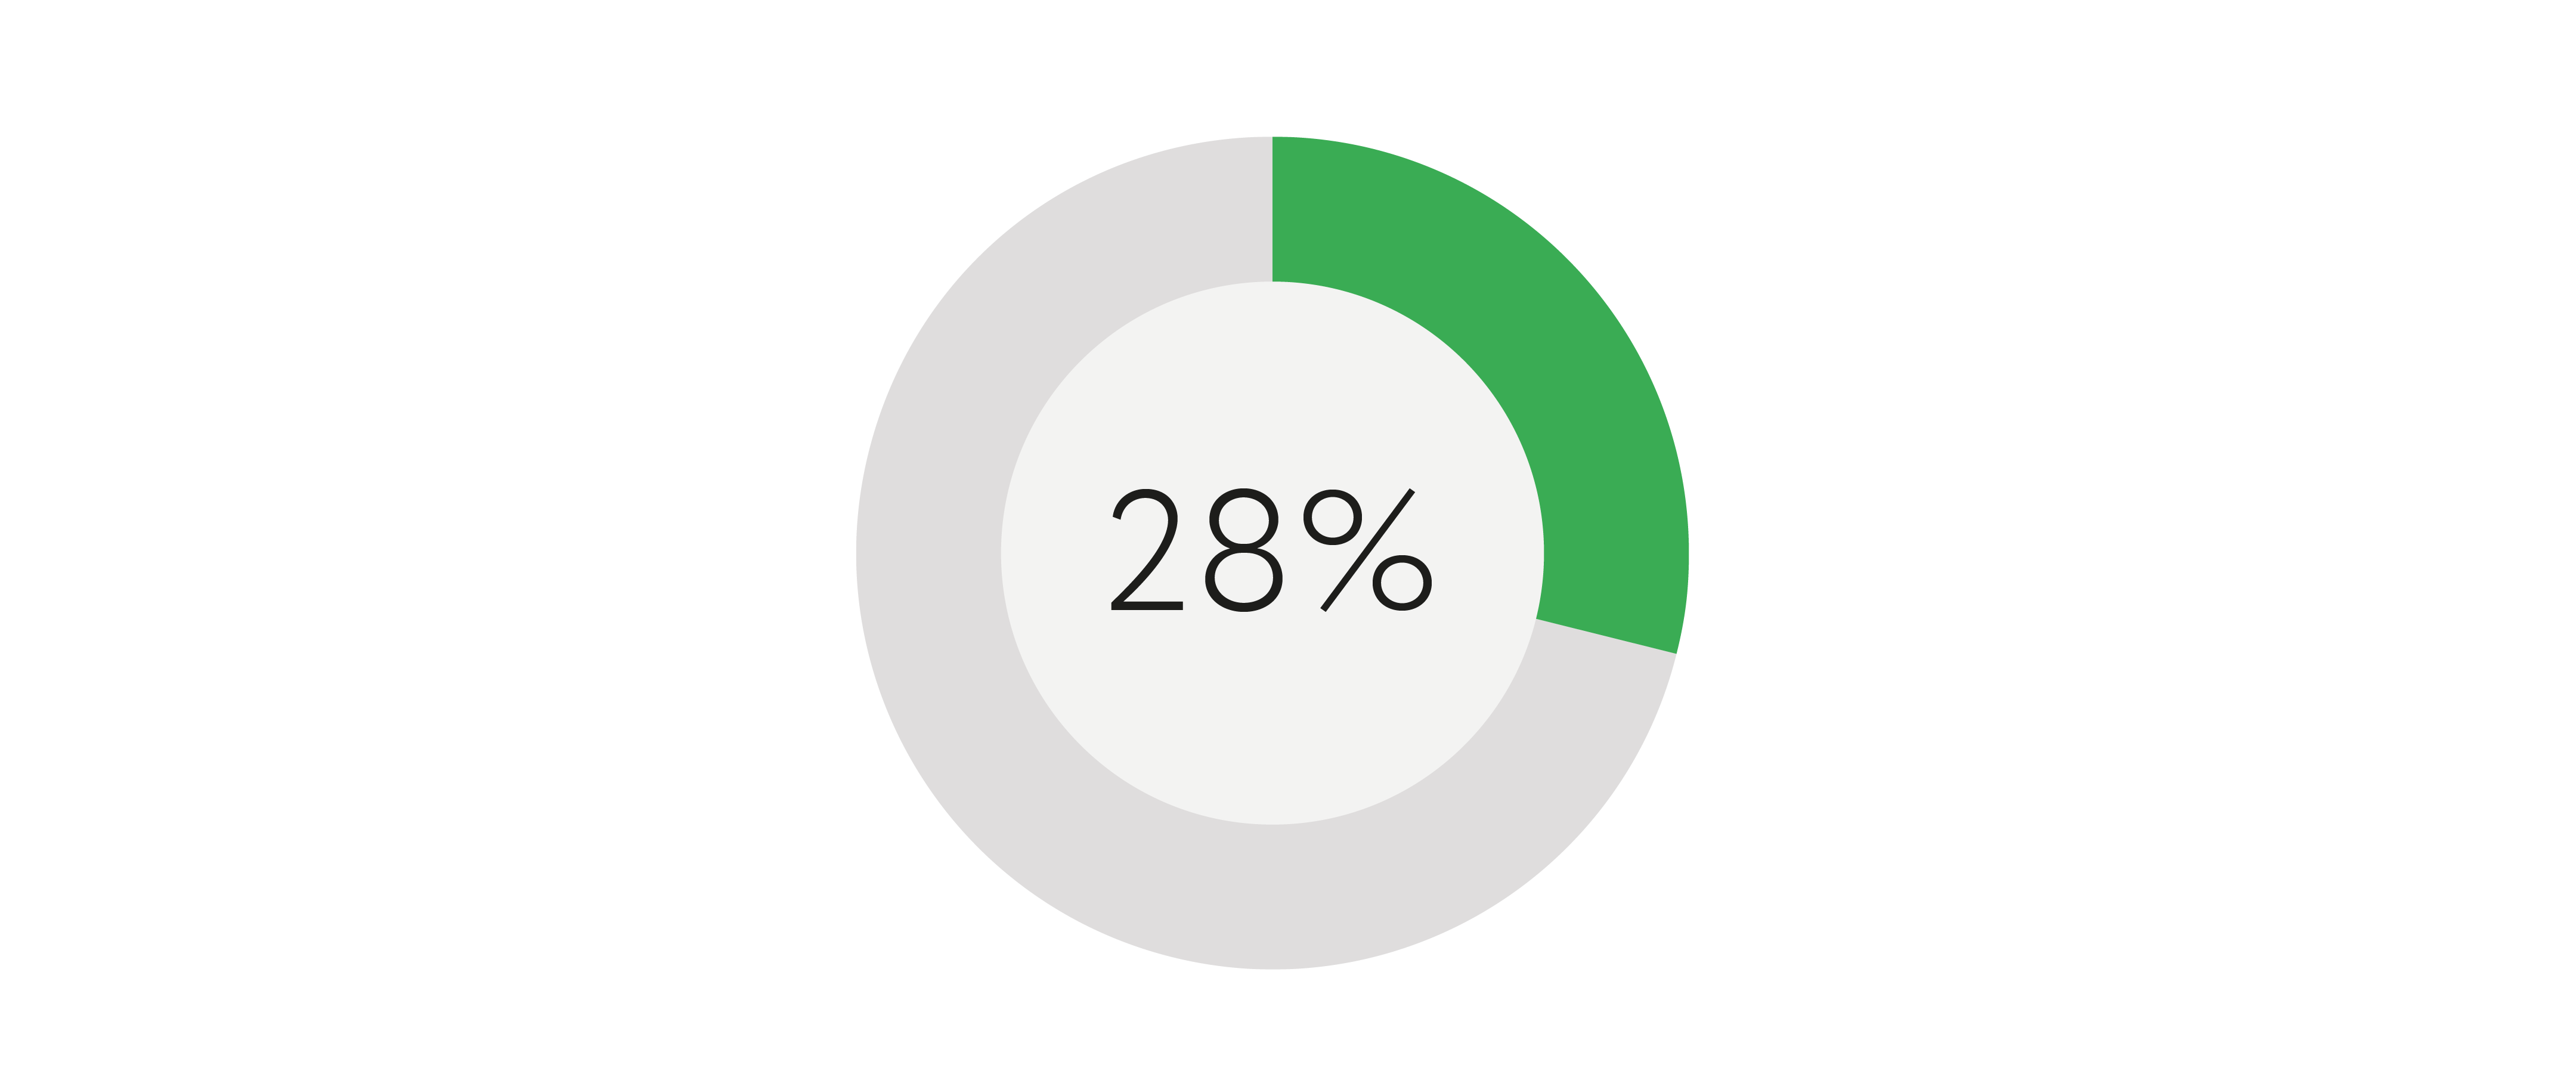 pie chart 28%